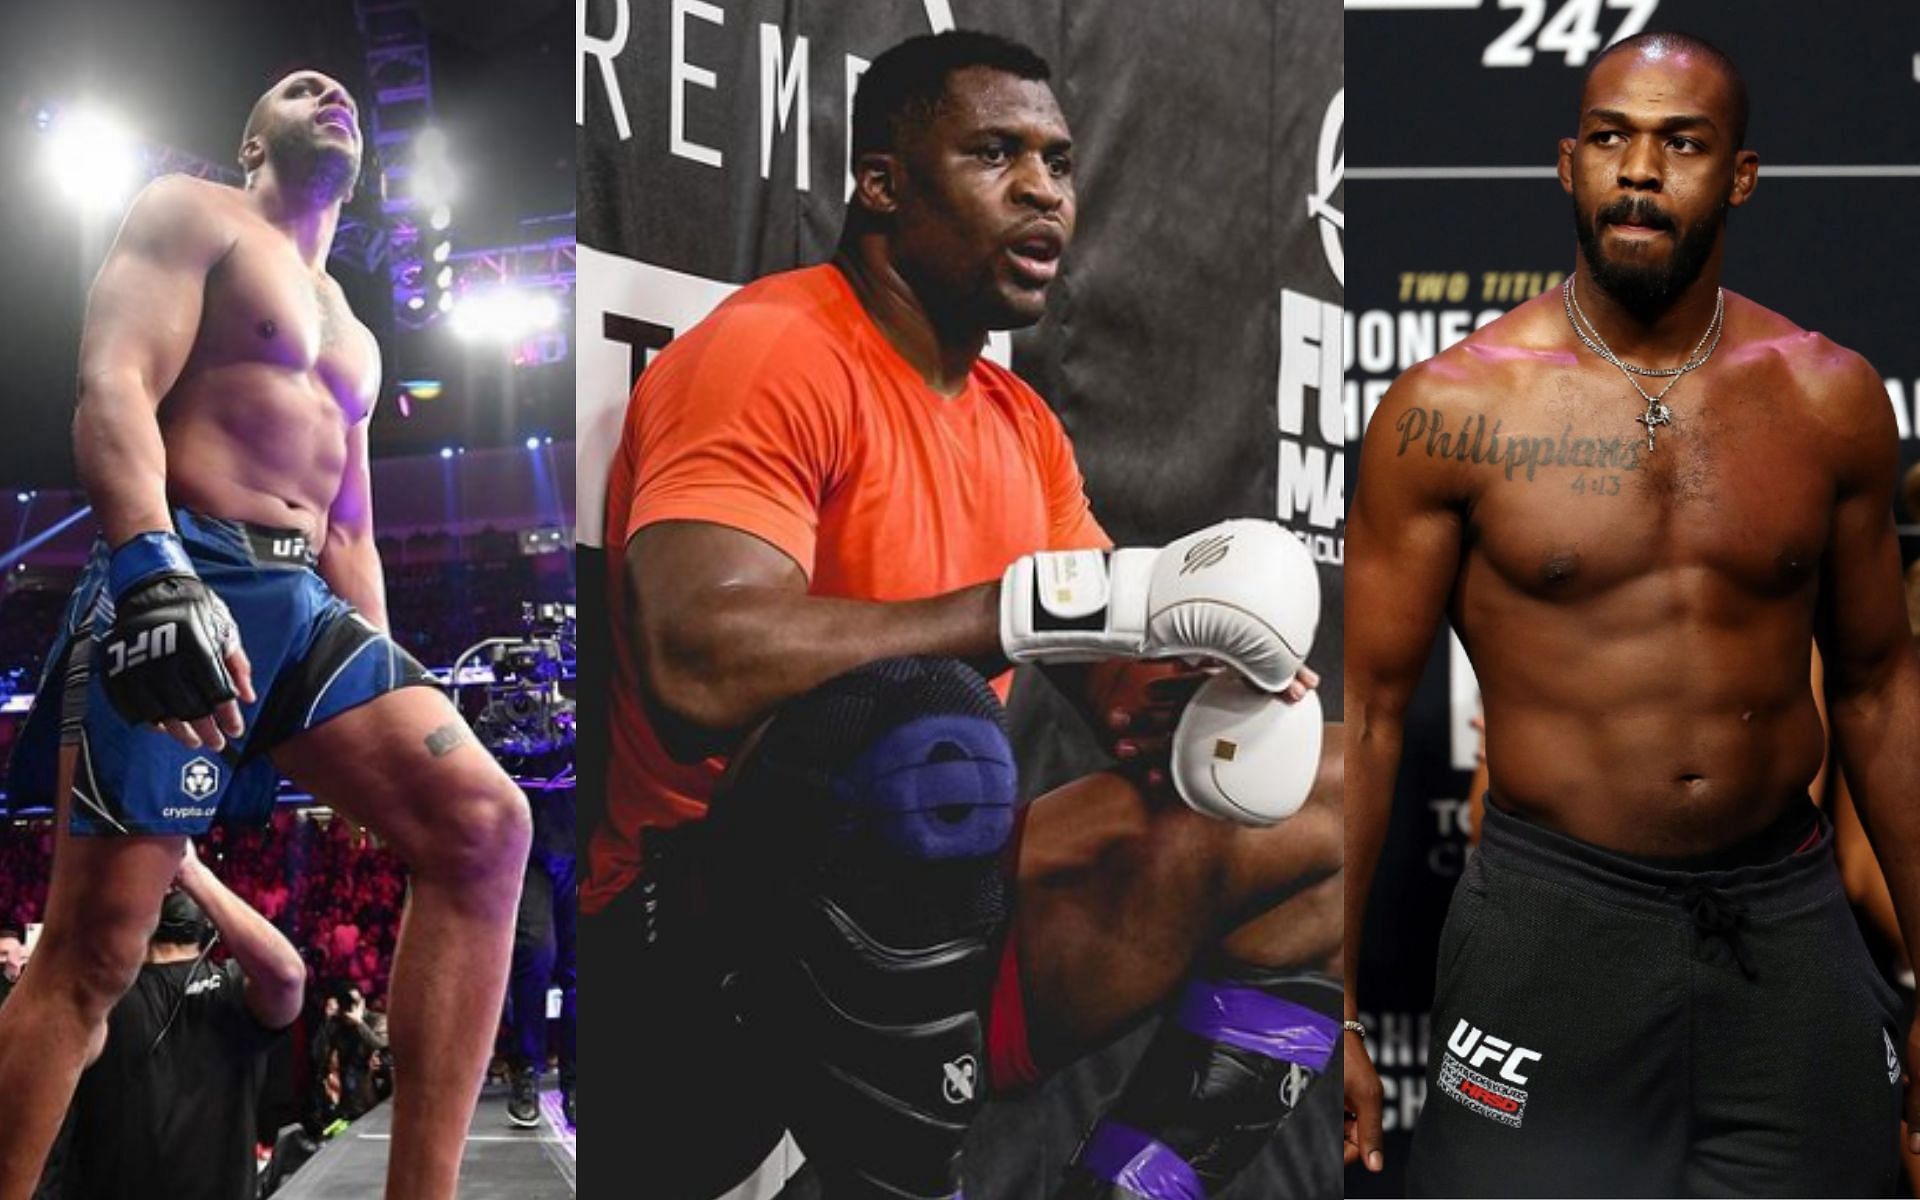 BREAKING: UFC to strip Francis Ngannou and book Jon Jones vs. Ciryl Gane for vacant heavyweight title [Images via: @francisngannou and @ciryl_gane on Instagram]